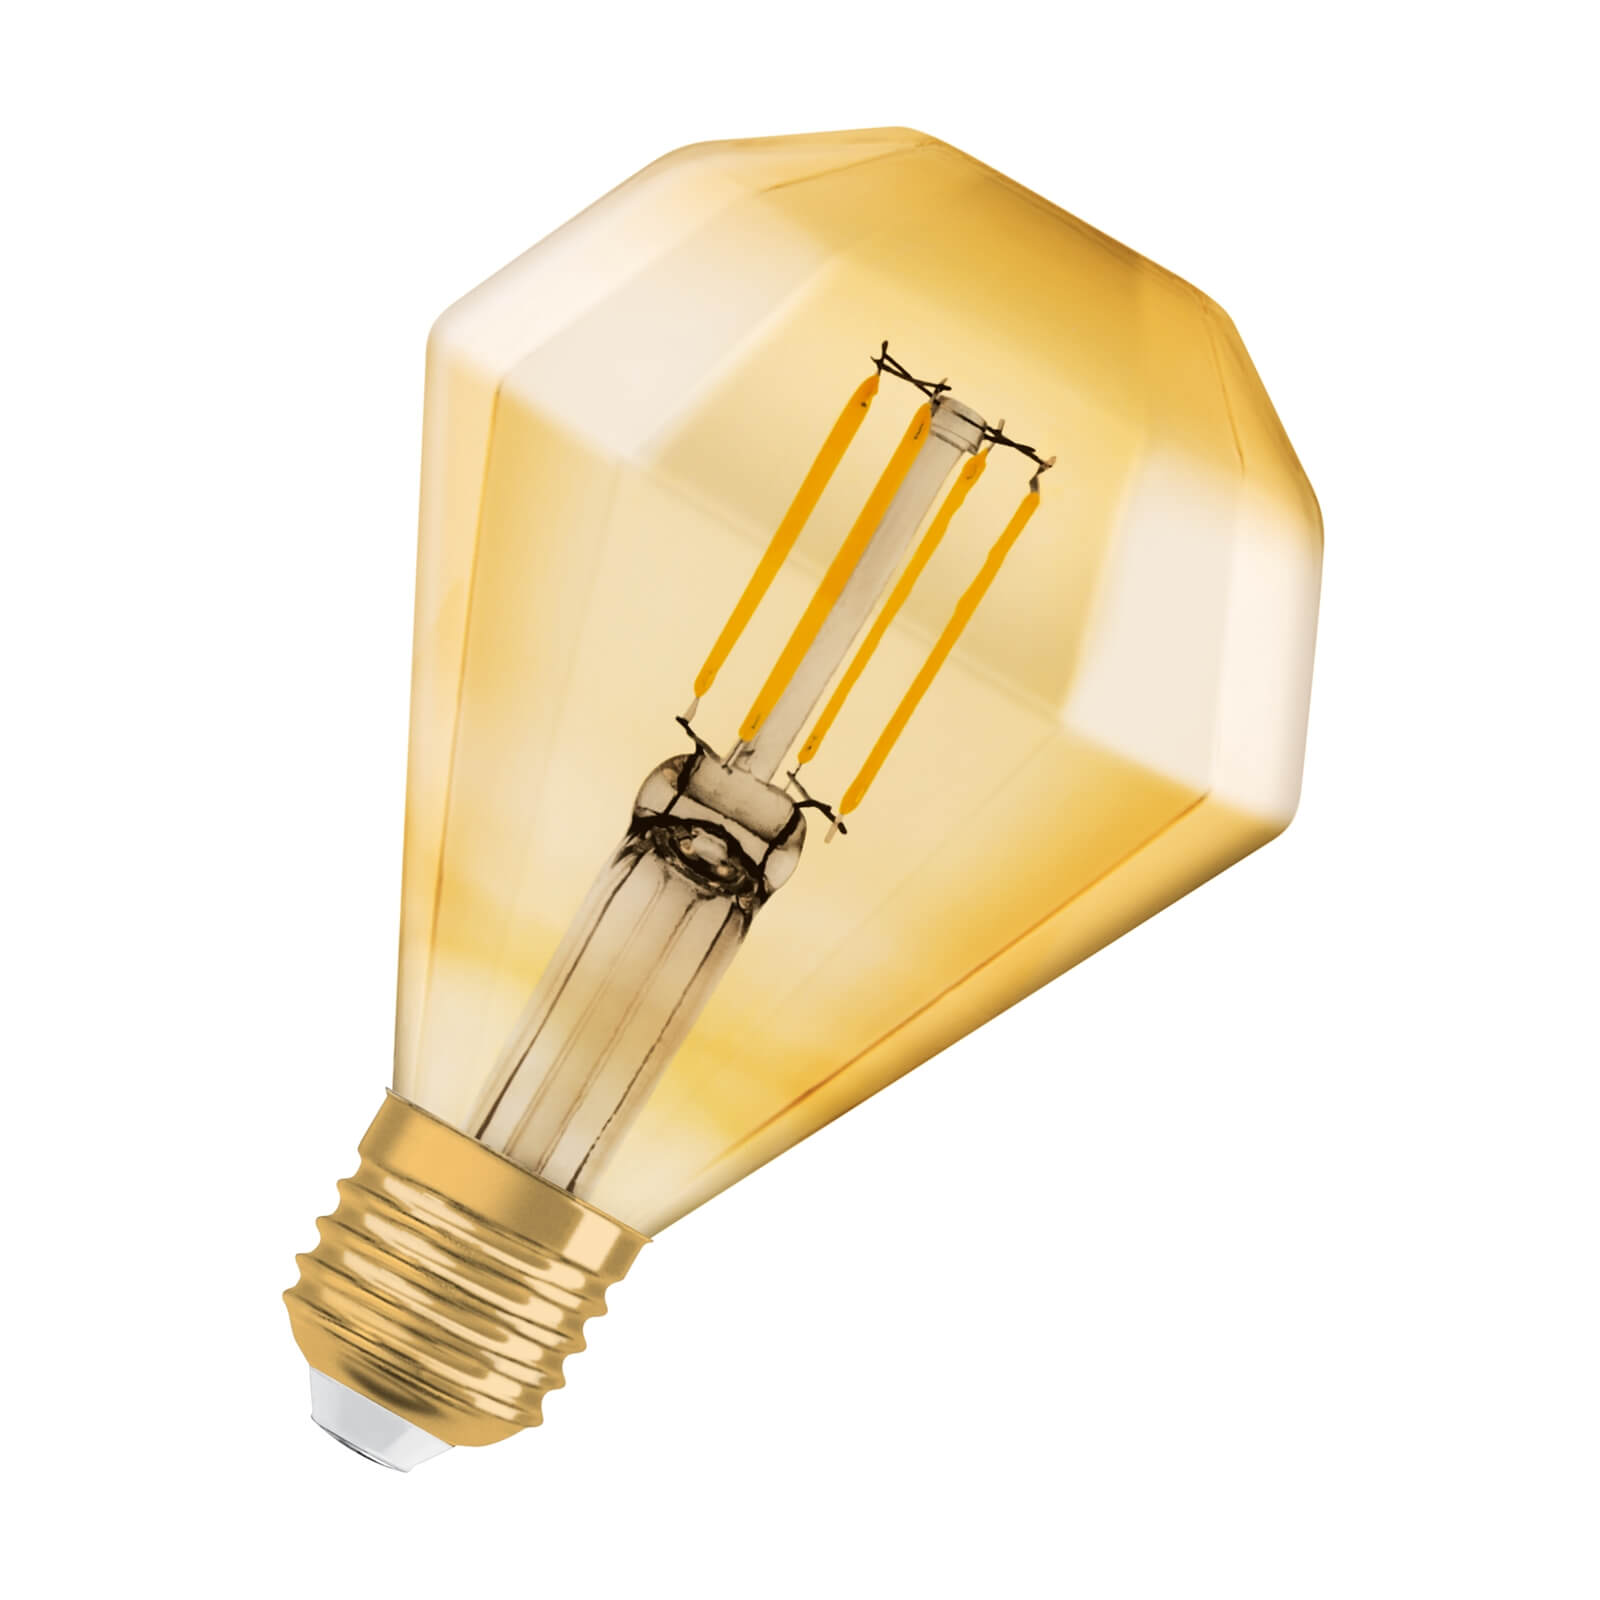 Osram 1906 LED Diamond Vintage Gold 40W ES Light Bulb